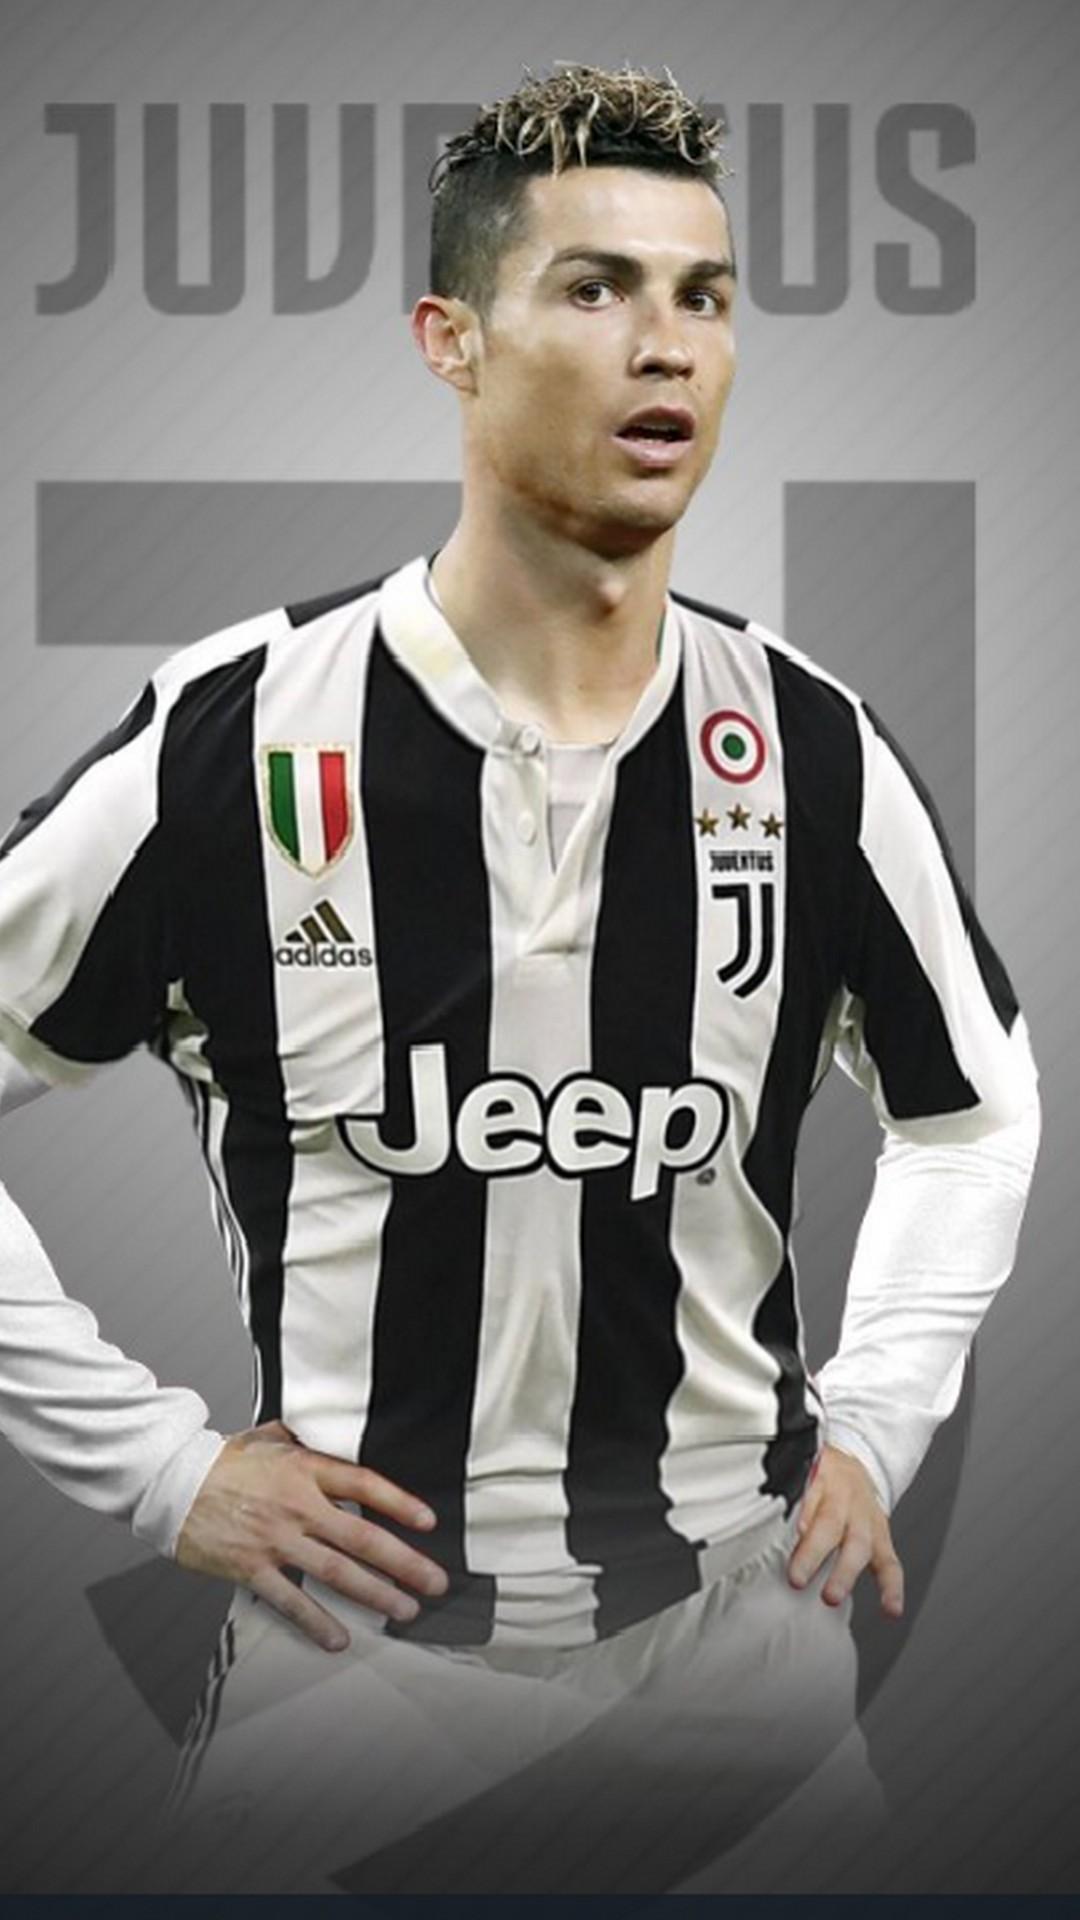 Wallpaper Cristiano Ronaldo Juventus Android Android Wallpaper